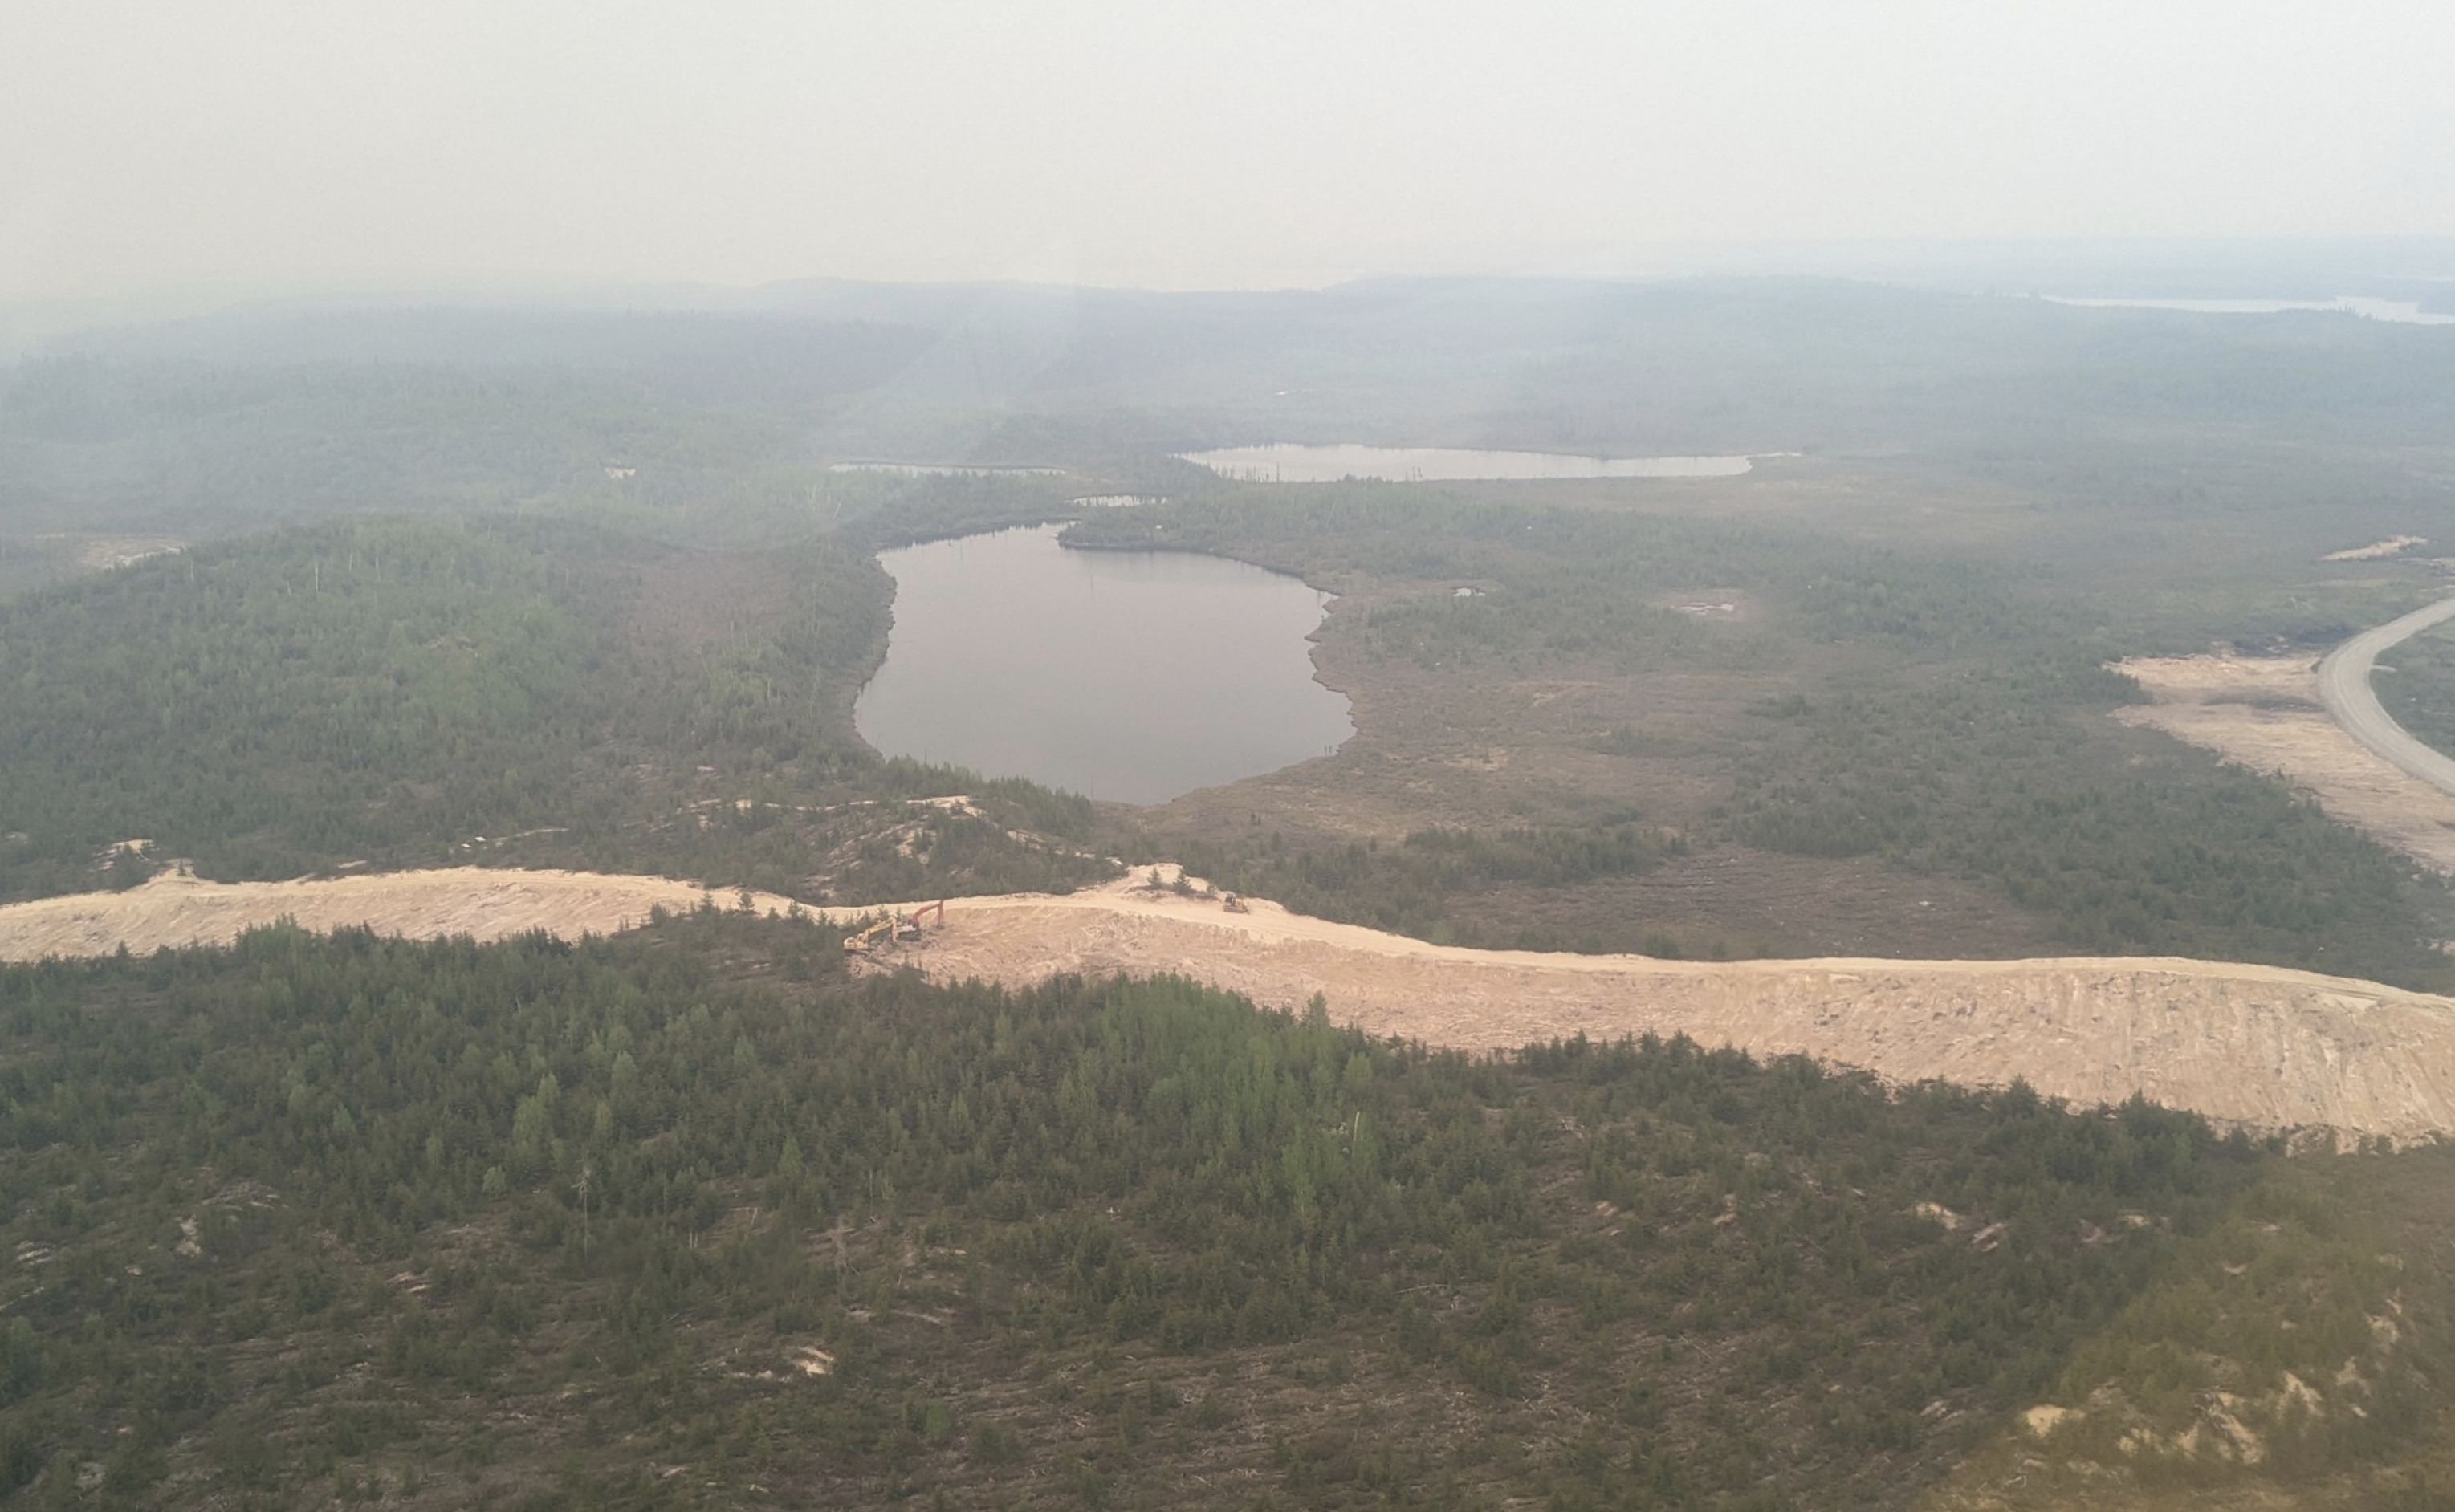 Feu de forêt
Chibougamau 
Barriere arret feu